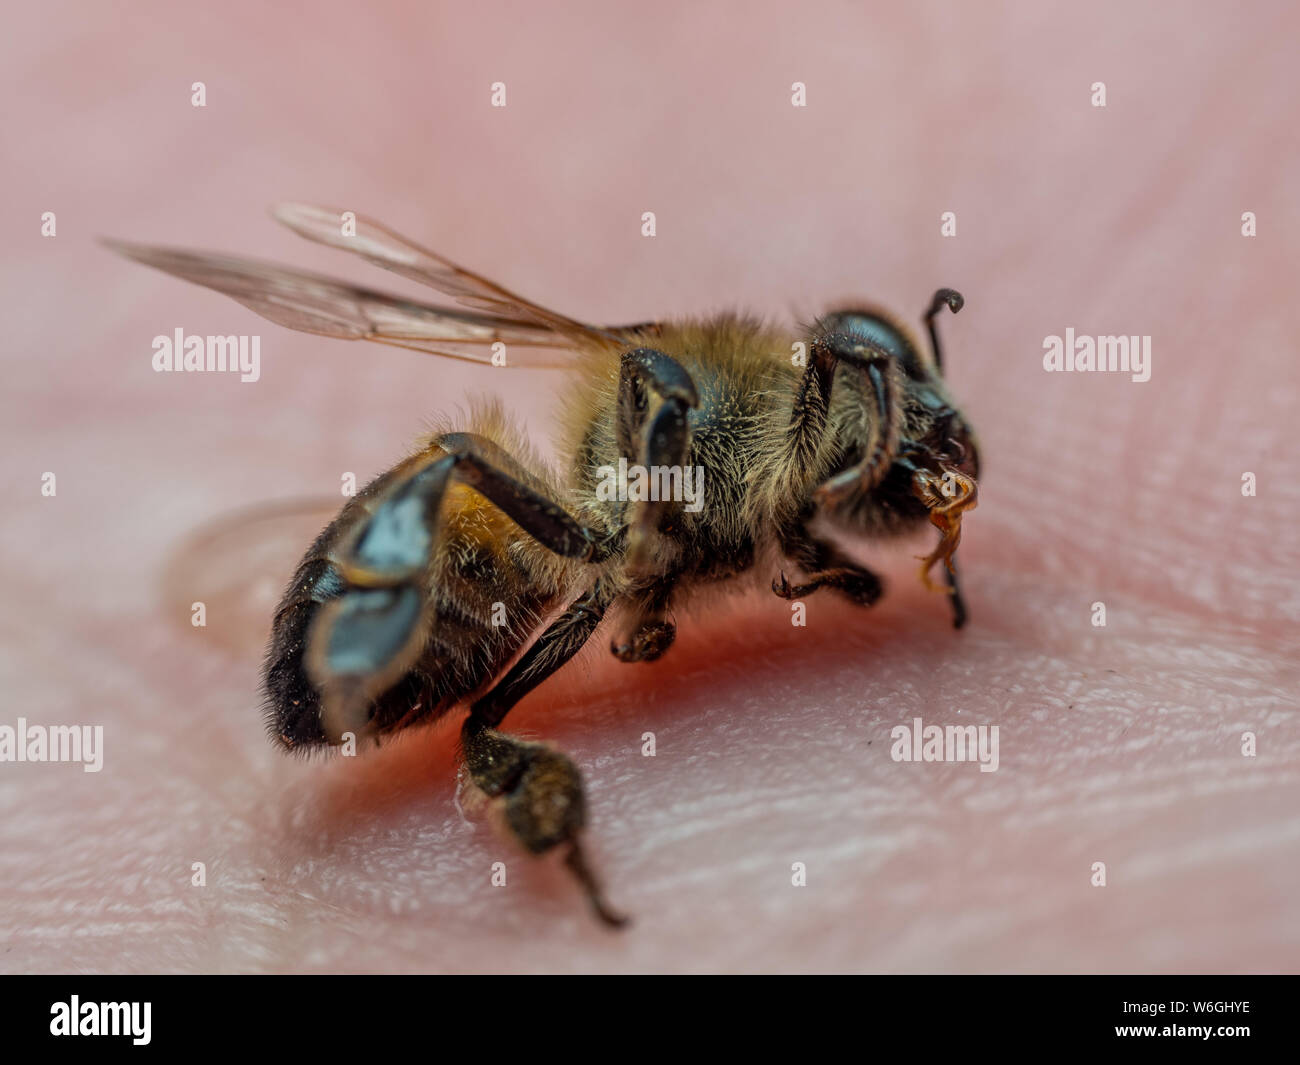 Dead honeybee on human hand, illustrates honey bee mortality Stock Photo